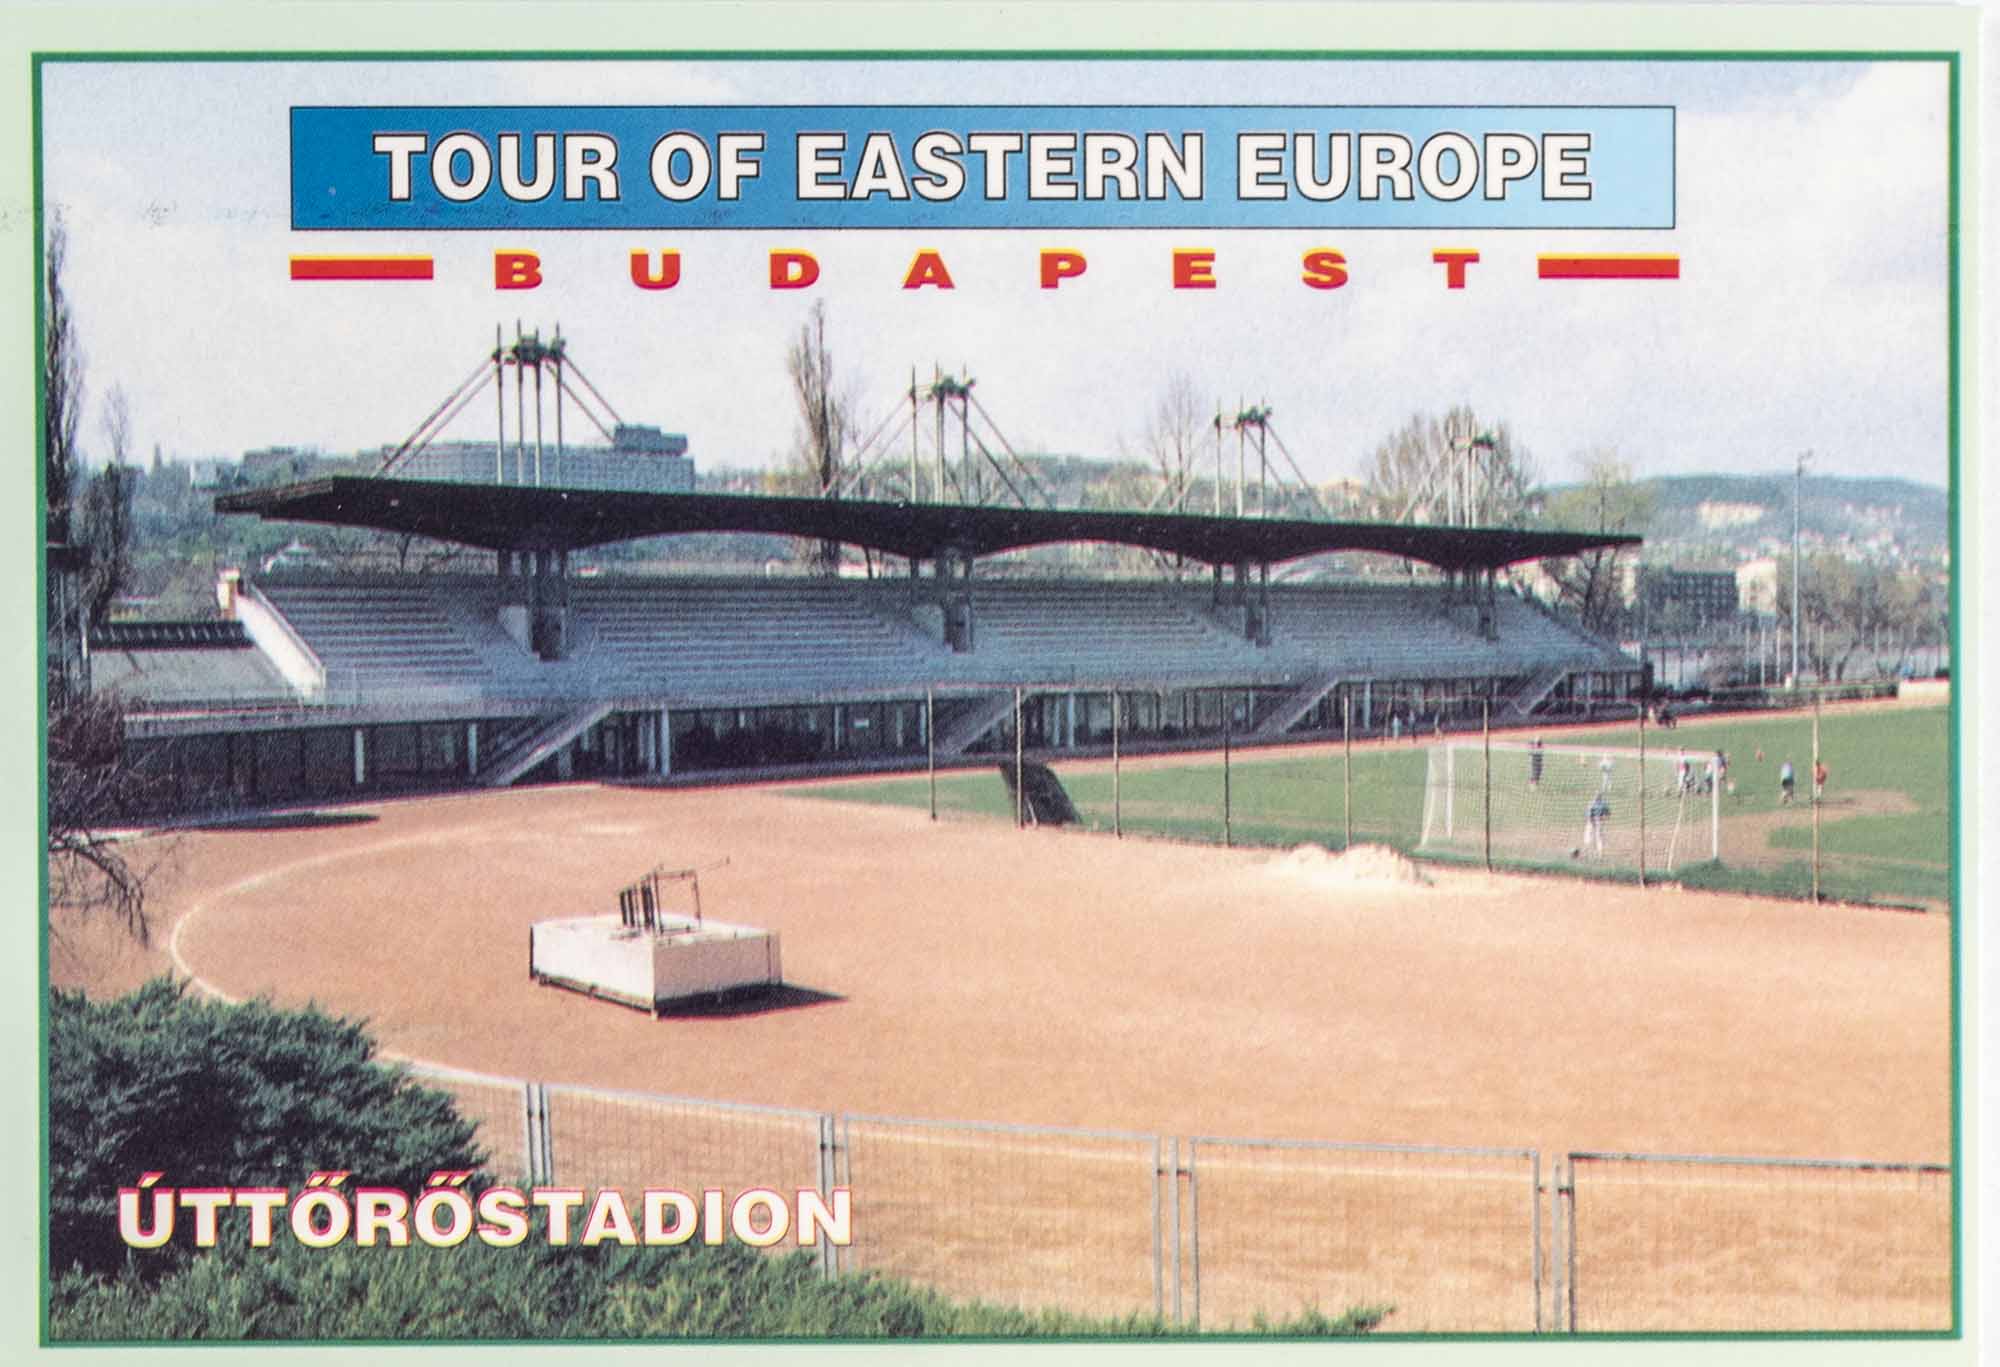 Pohlednice Stadion, Tour of Eastern Europe, Úttorostadion, Budapest